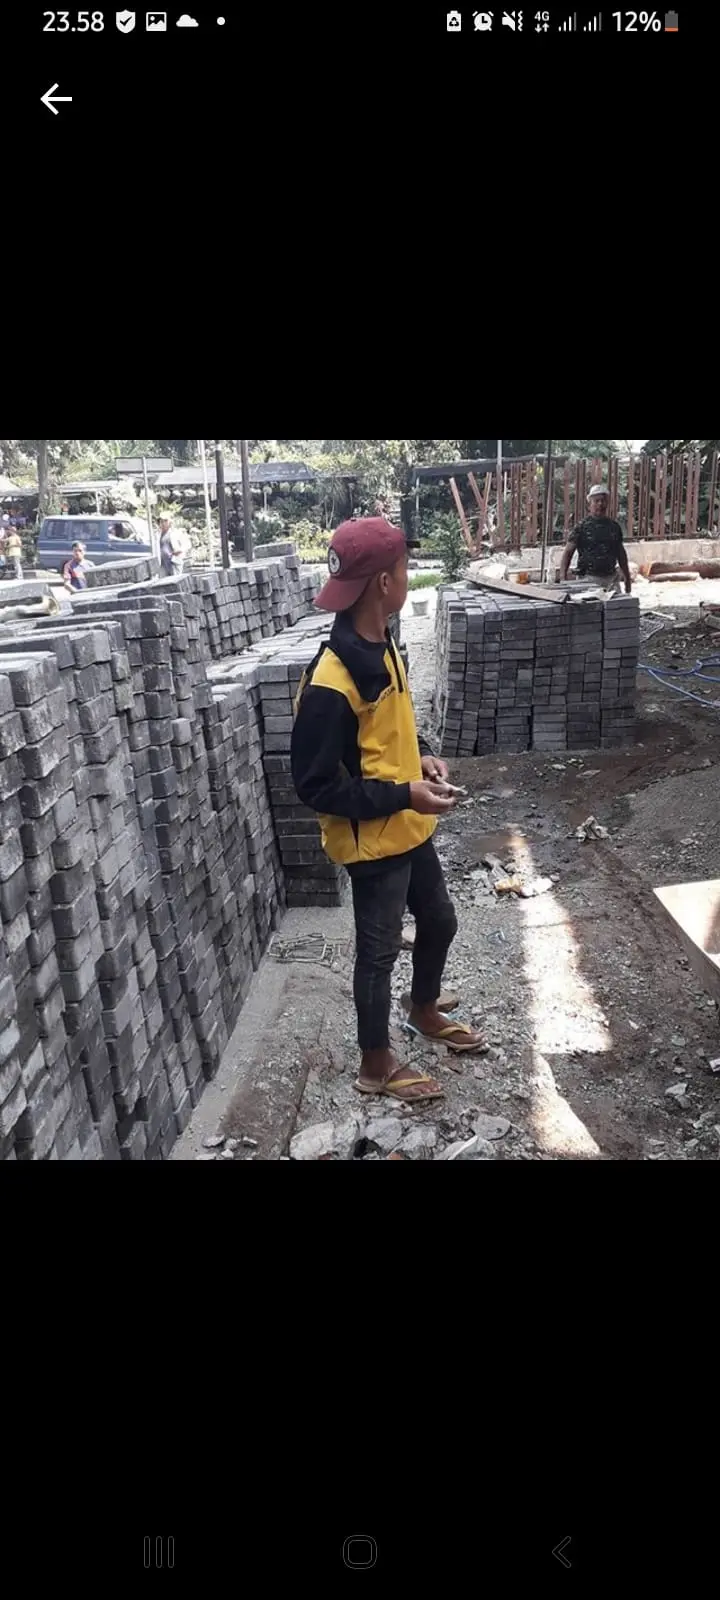 Jual Paving Block PD Mekar Jaya Murah Berkualitas Di Jakarta Selatan